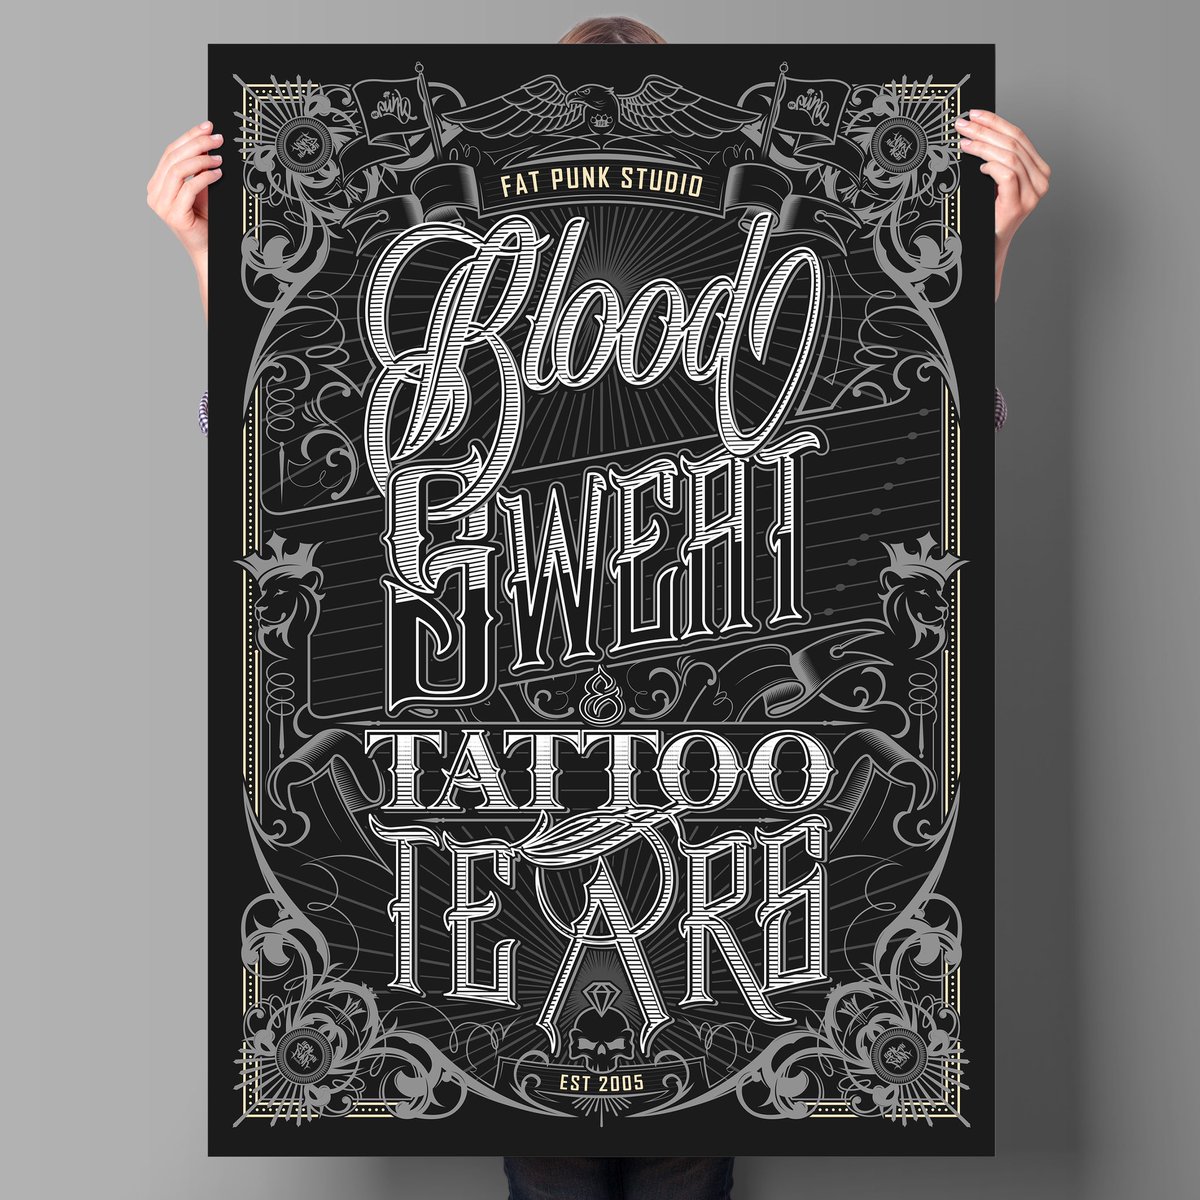 Blood Sweat & Tattoo Tears custom #typography #illustration. Visionary Design since 2005. Explore our #creative #design services via link in bio. 
•
#typographic #typedesign #artcollective #fatpunkstudio #artworld #bloodsweatandtears #bloodsweatandtattootears